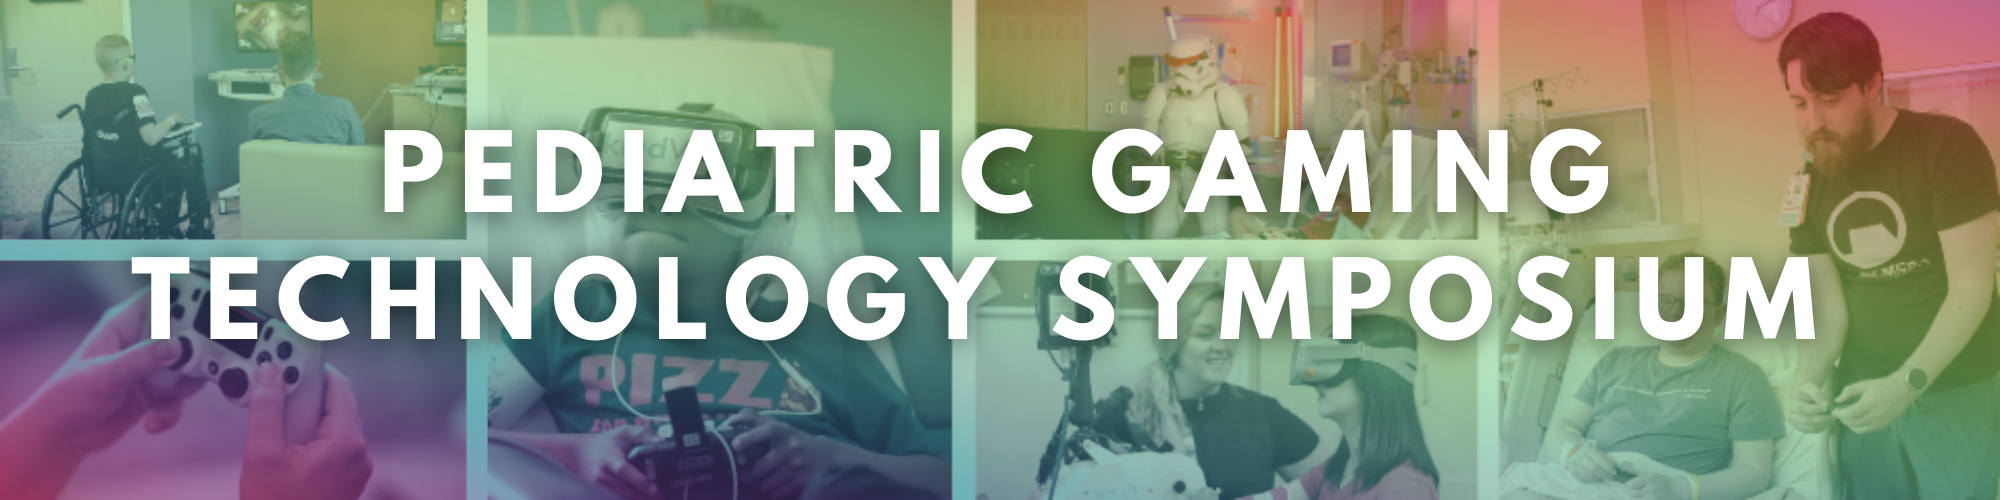 Pediatric Gaming Technology Symposium Banner